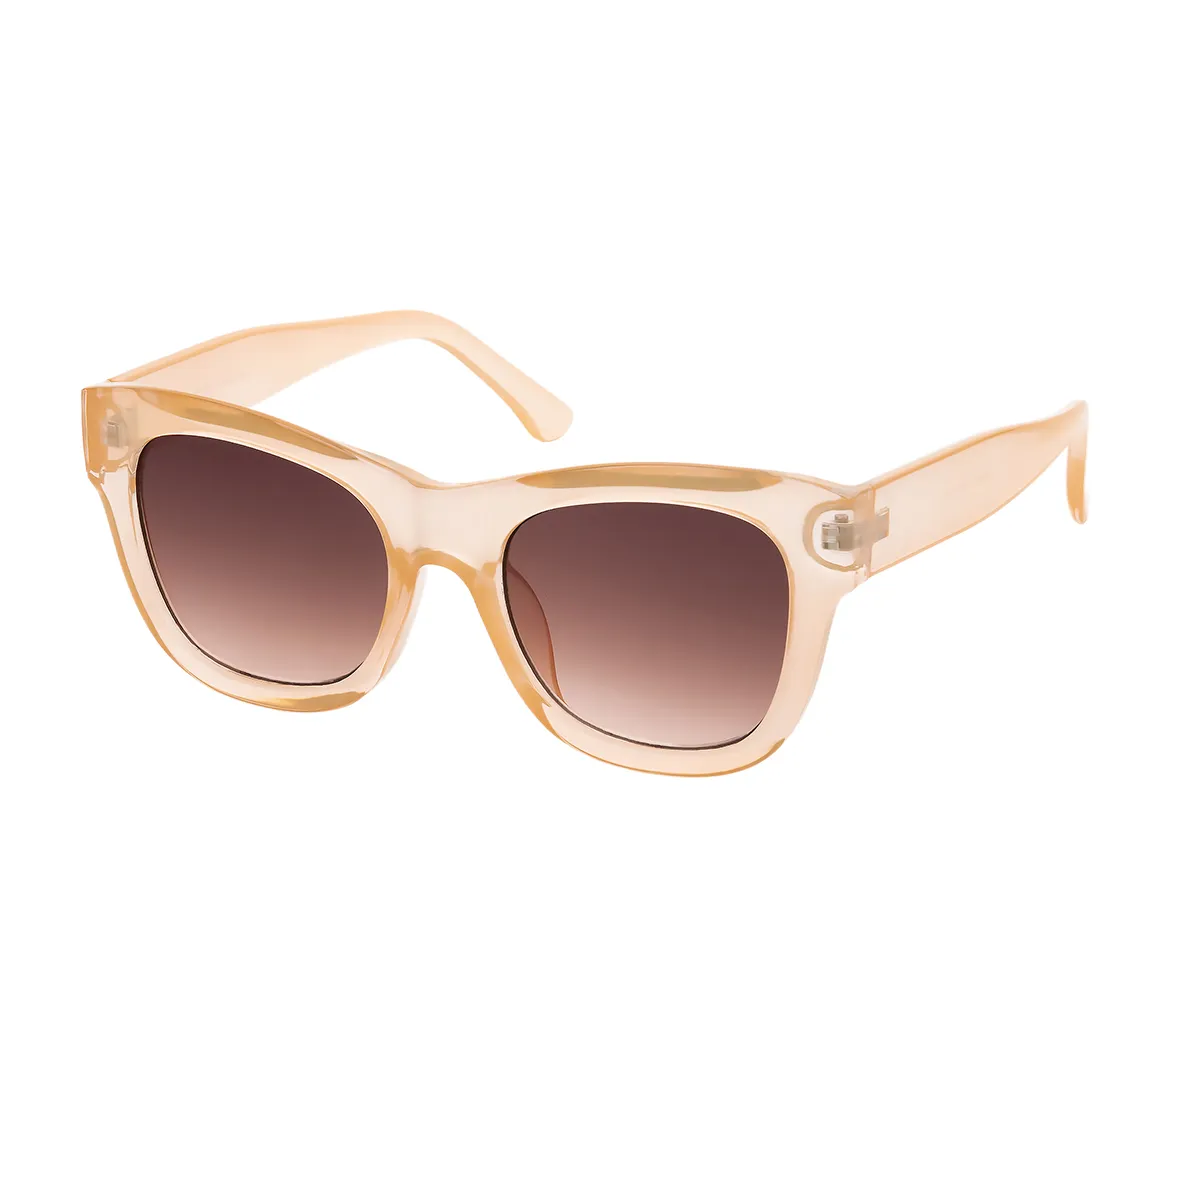 Aniston - Square Tea Sunglasses for Women